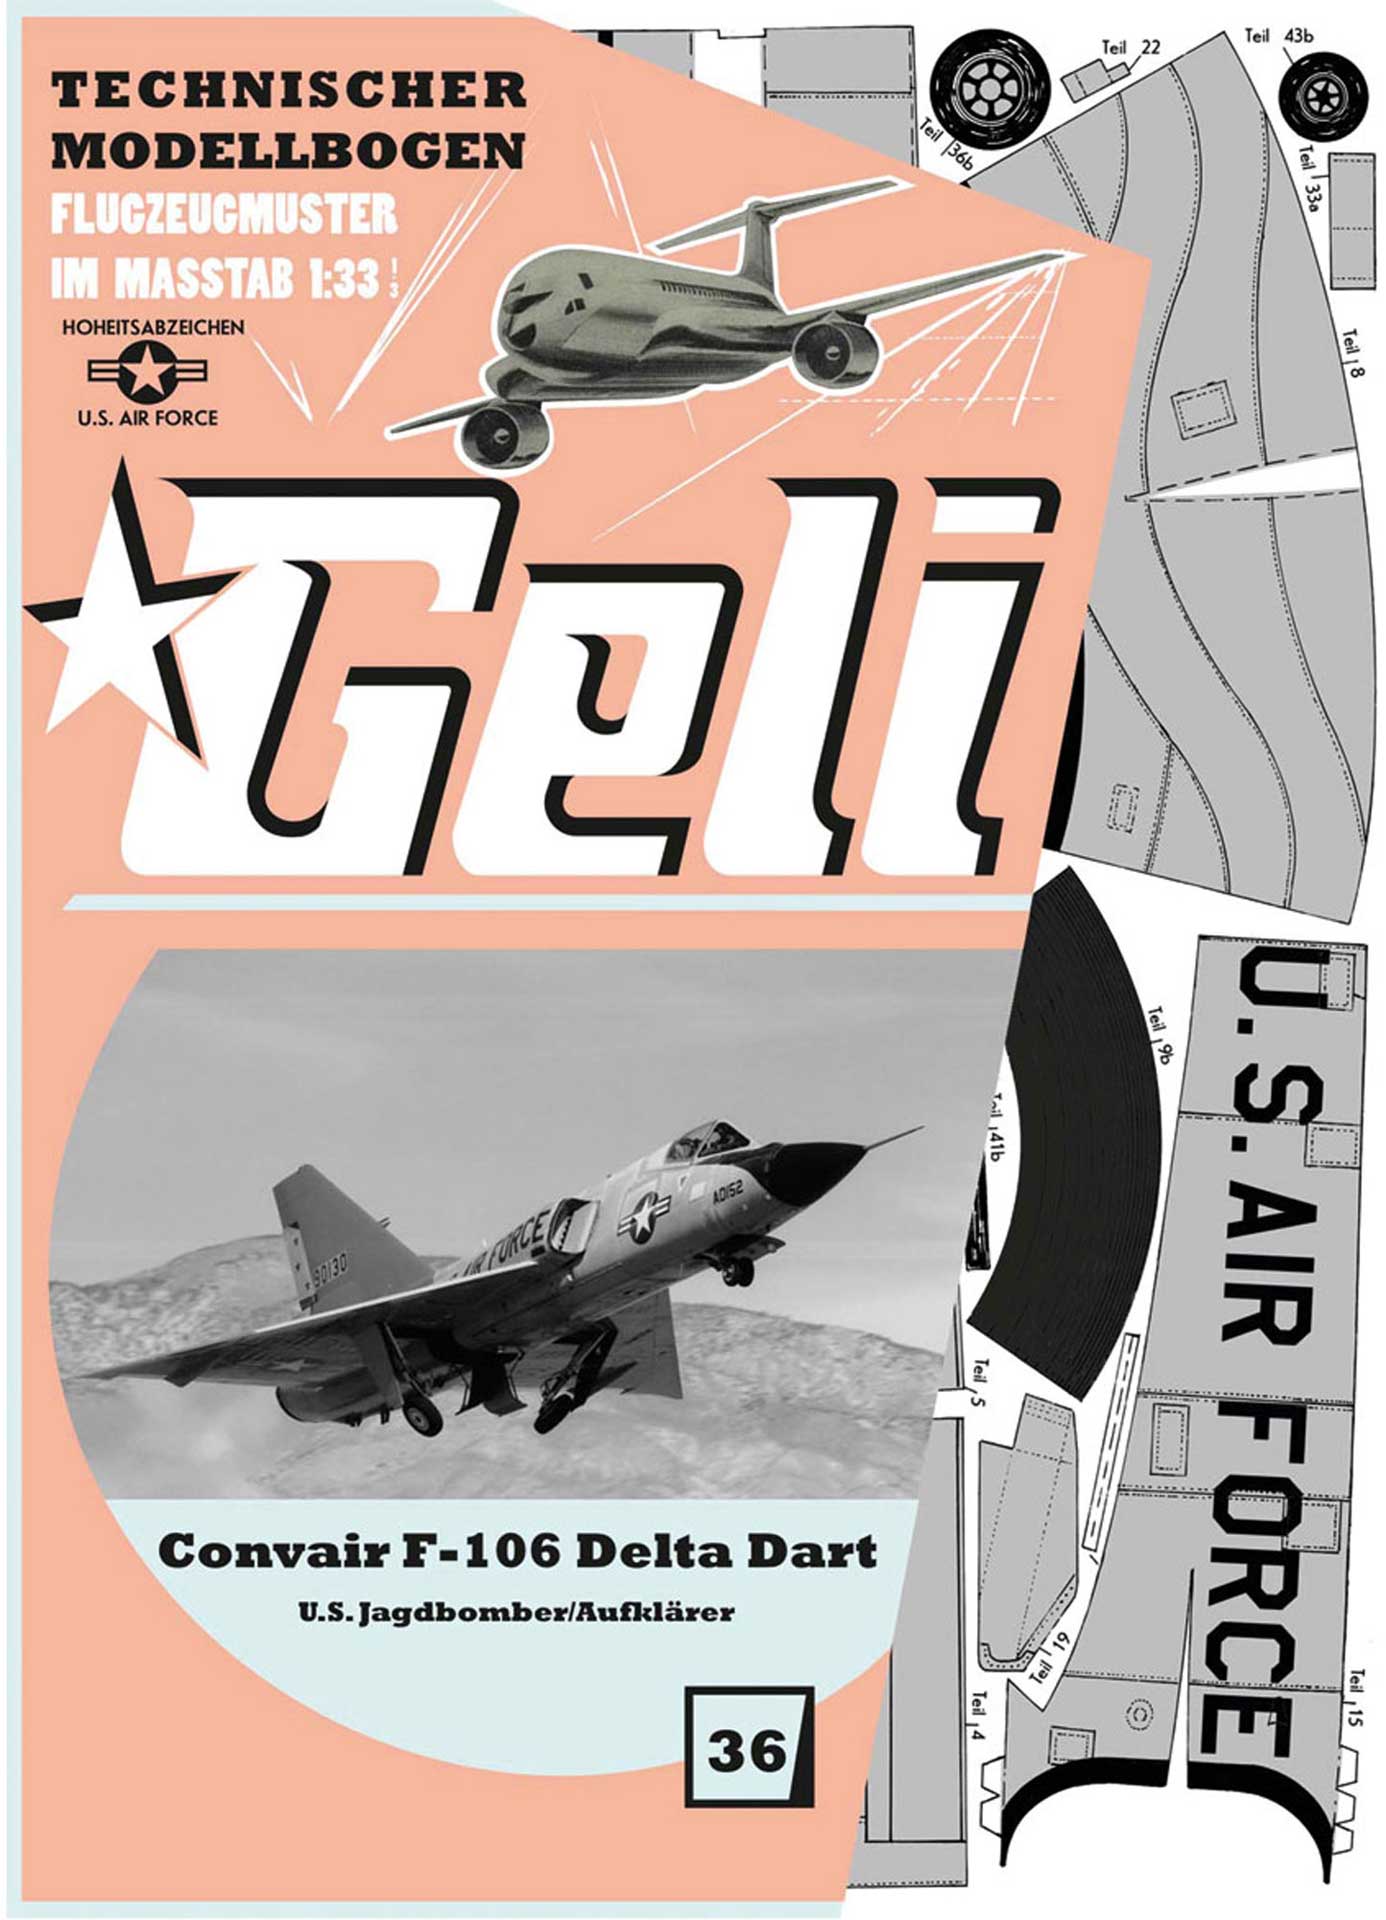 GELI F-106 "DELTADART" # 36 KARTONMODELL